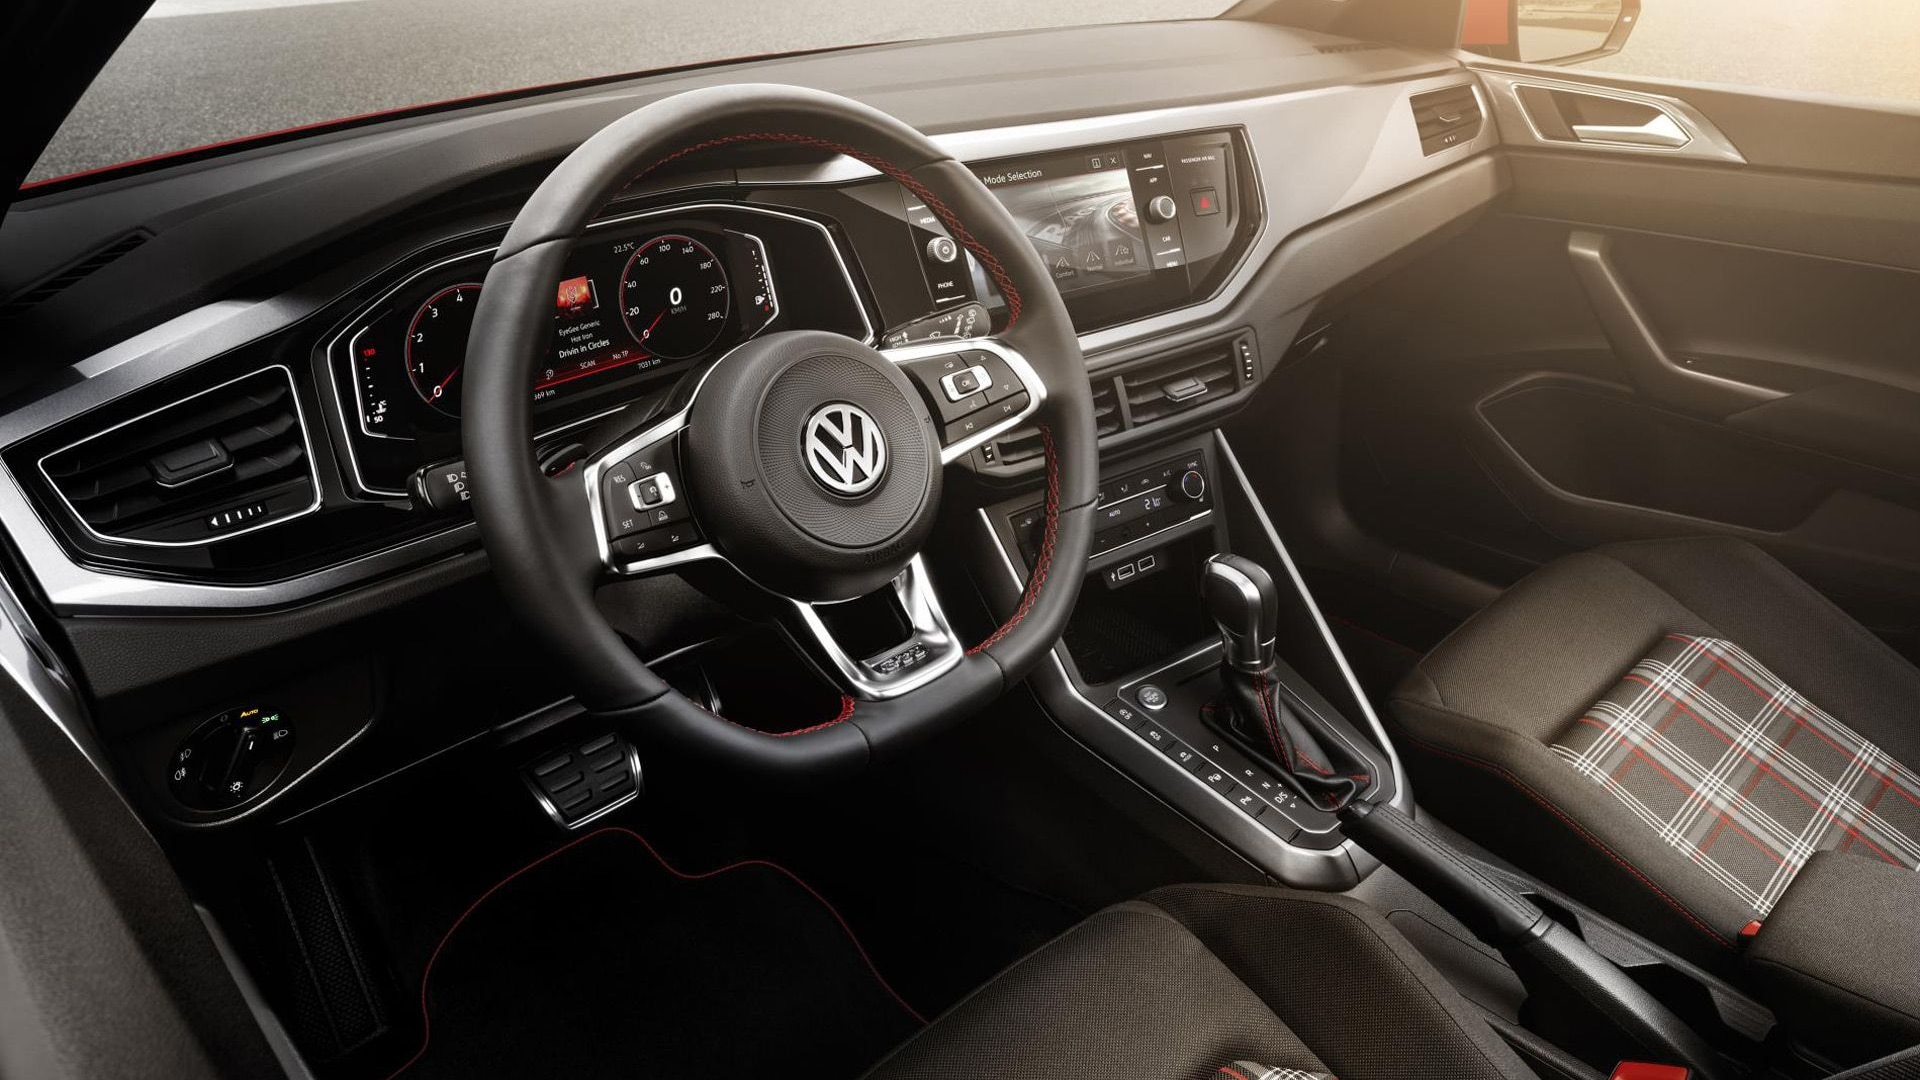 Oproepen heldin Allergie 2018 Volkswagen Polo revealed, GTI packs 197 horsepower